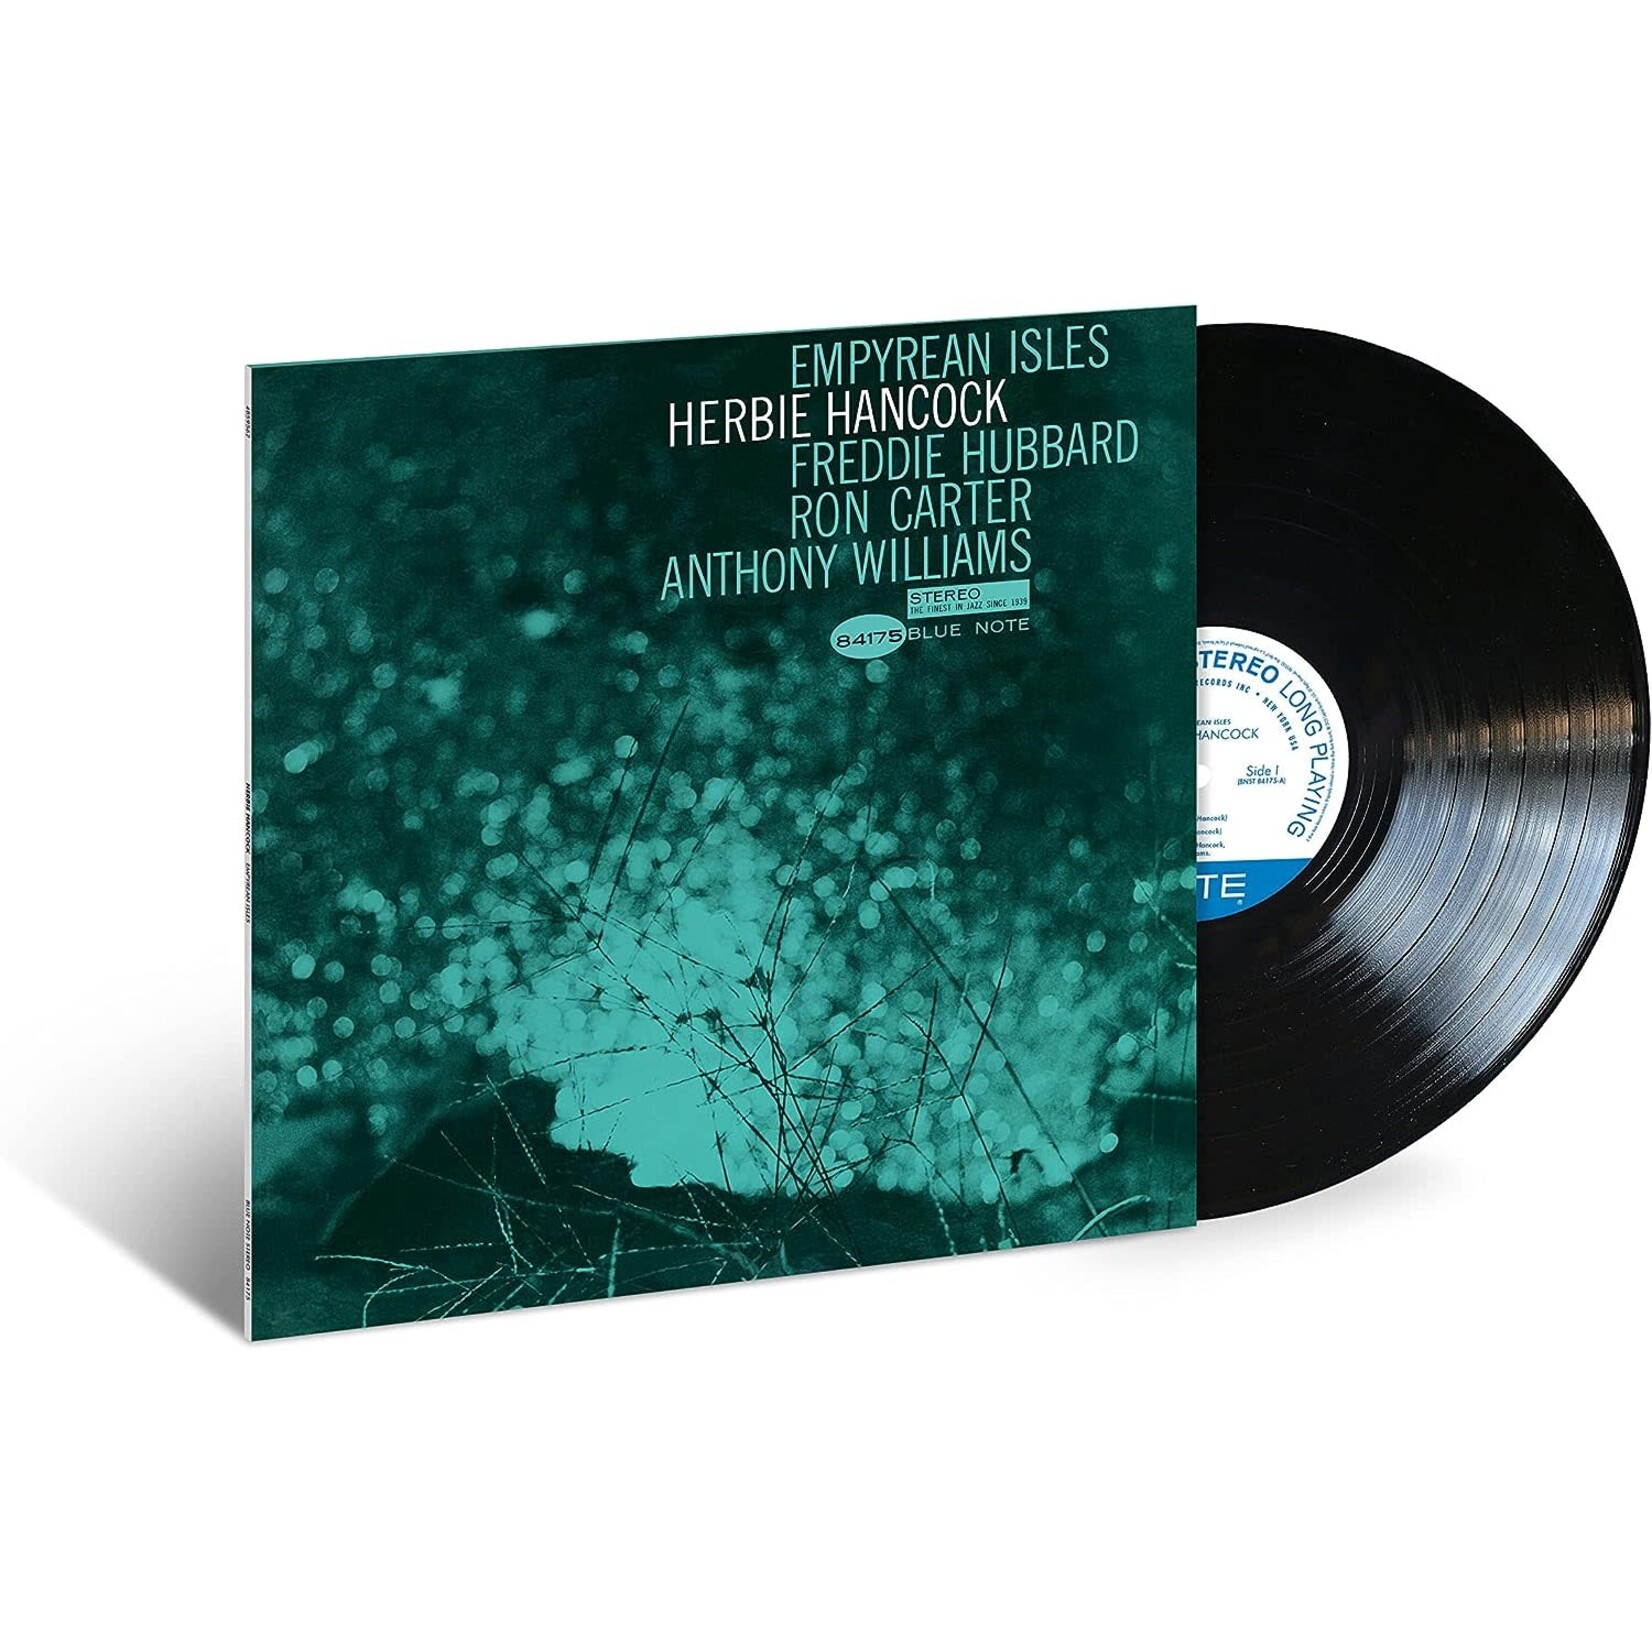 Herbie Hancock - Empyrean Isles (Blue Note Classic Vinyl Series) [LP]